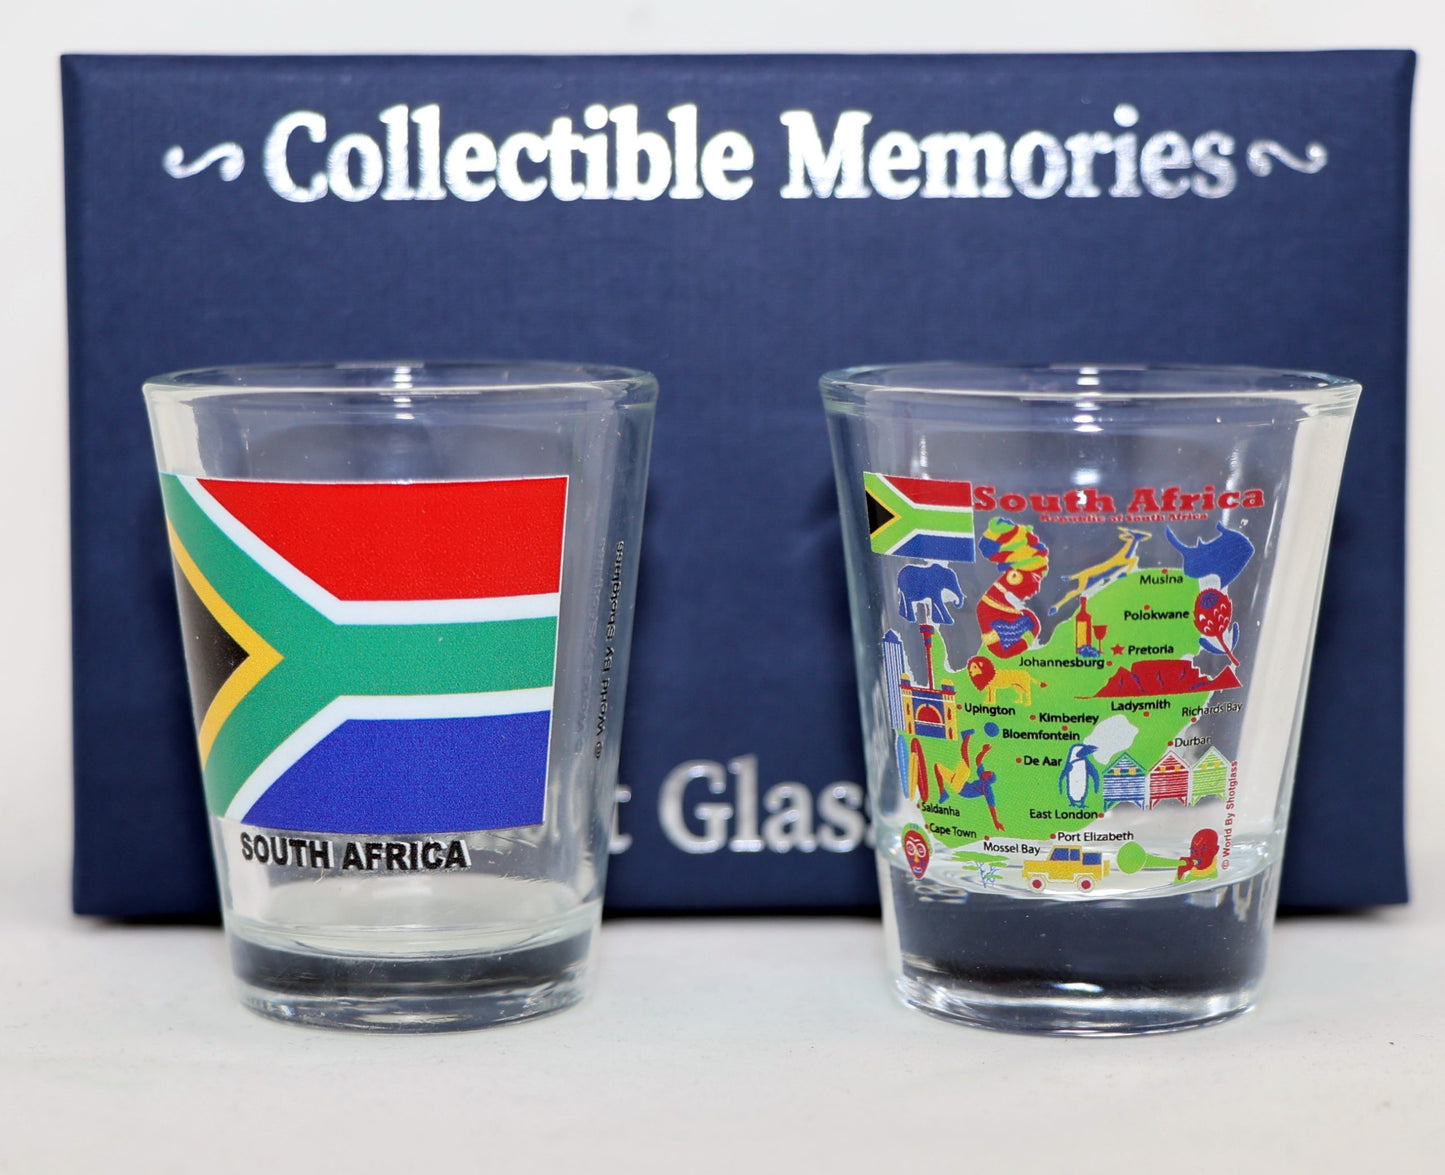 South Africa Souvenir Boxed Shot Glass Set (Set of 2)